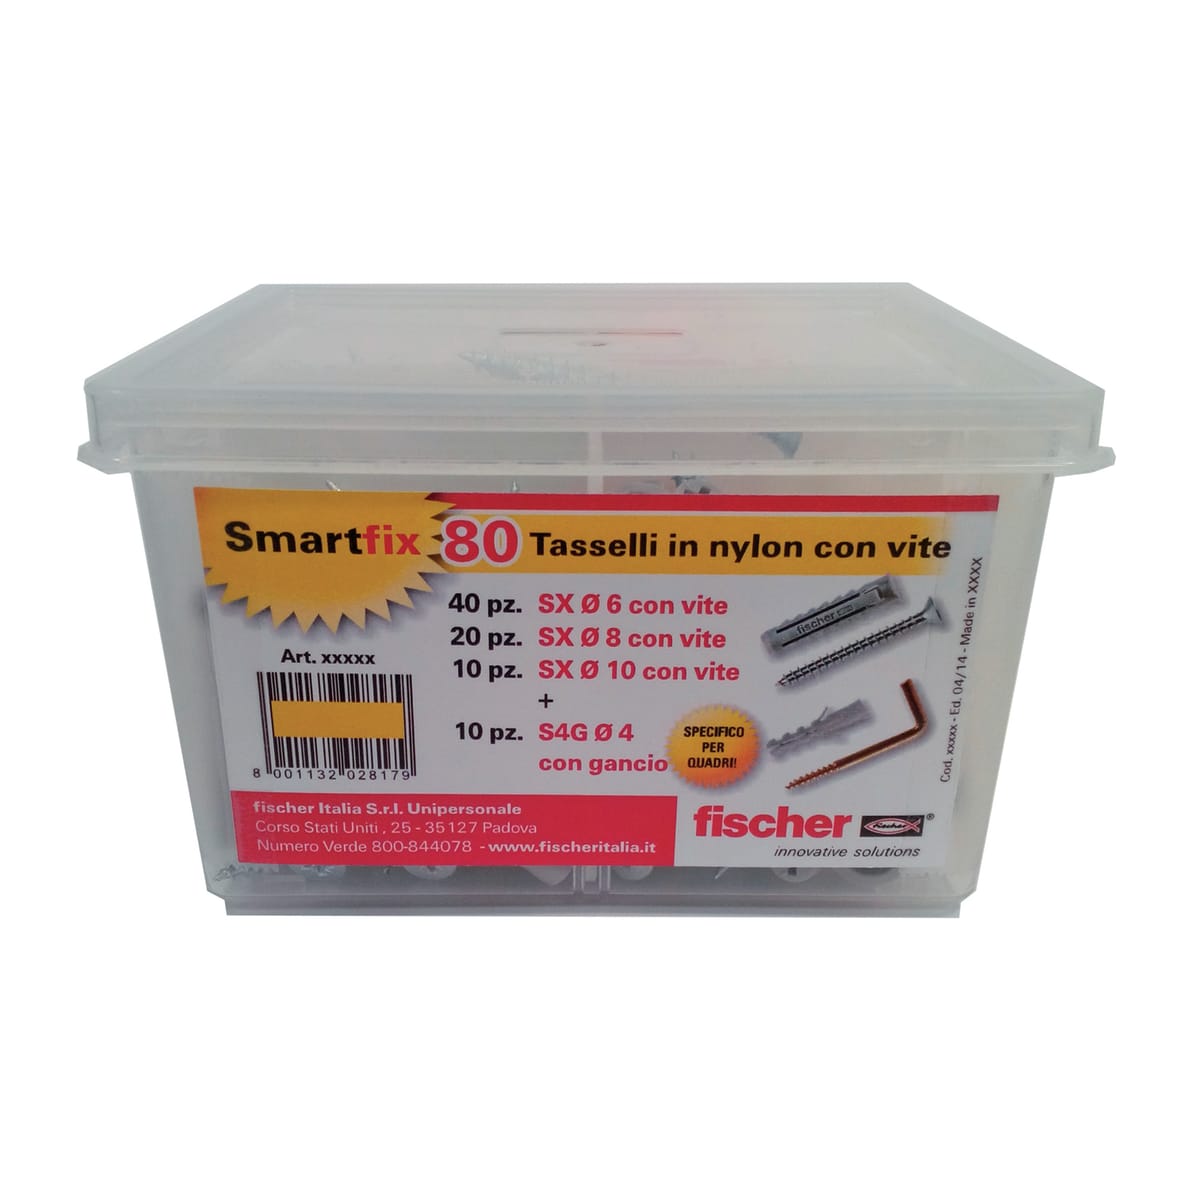 Smartfix box (70 assorted SX plugs with screw + 10 S with hook)